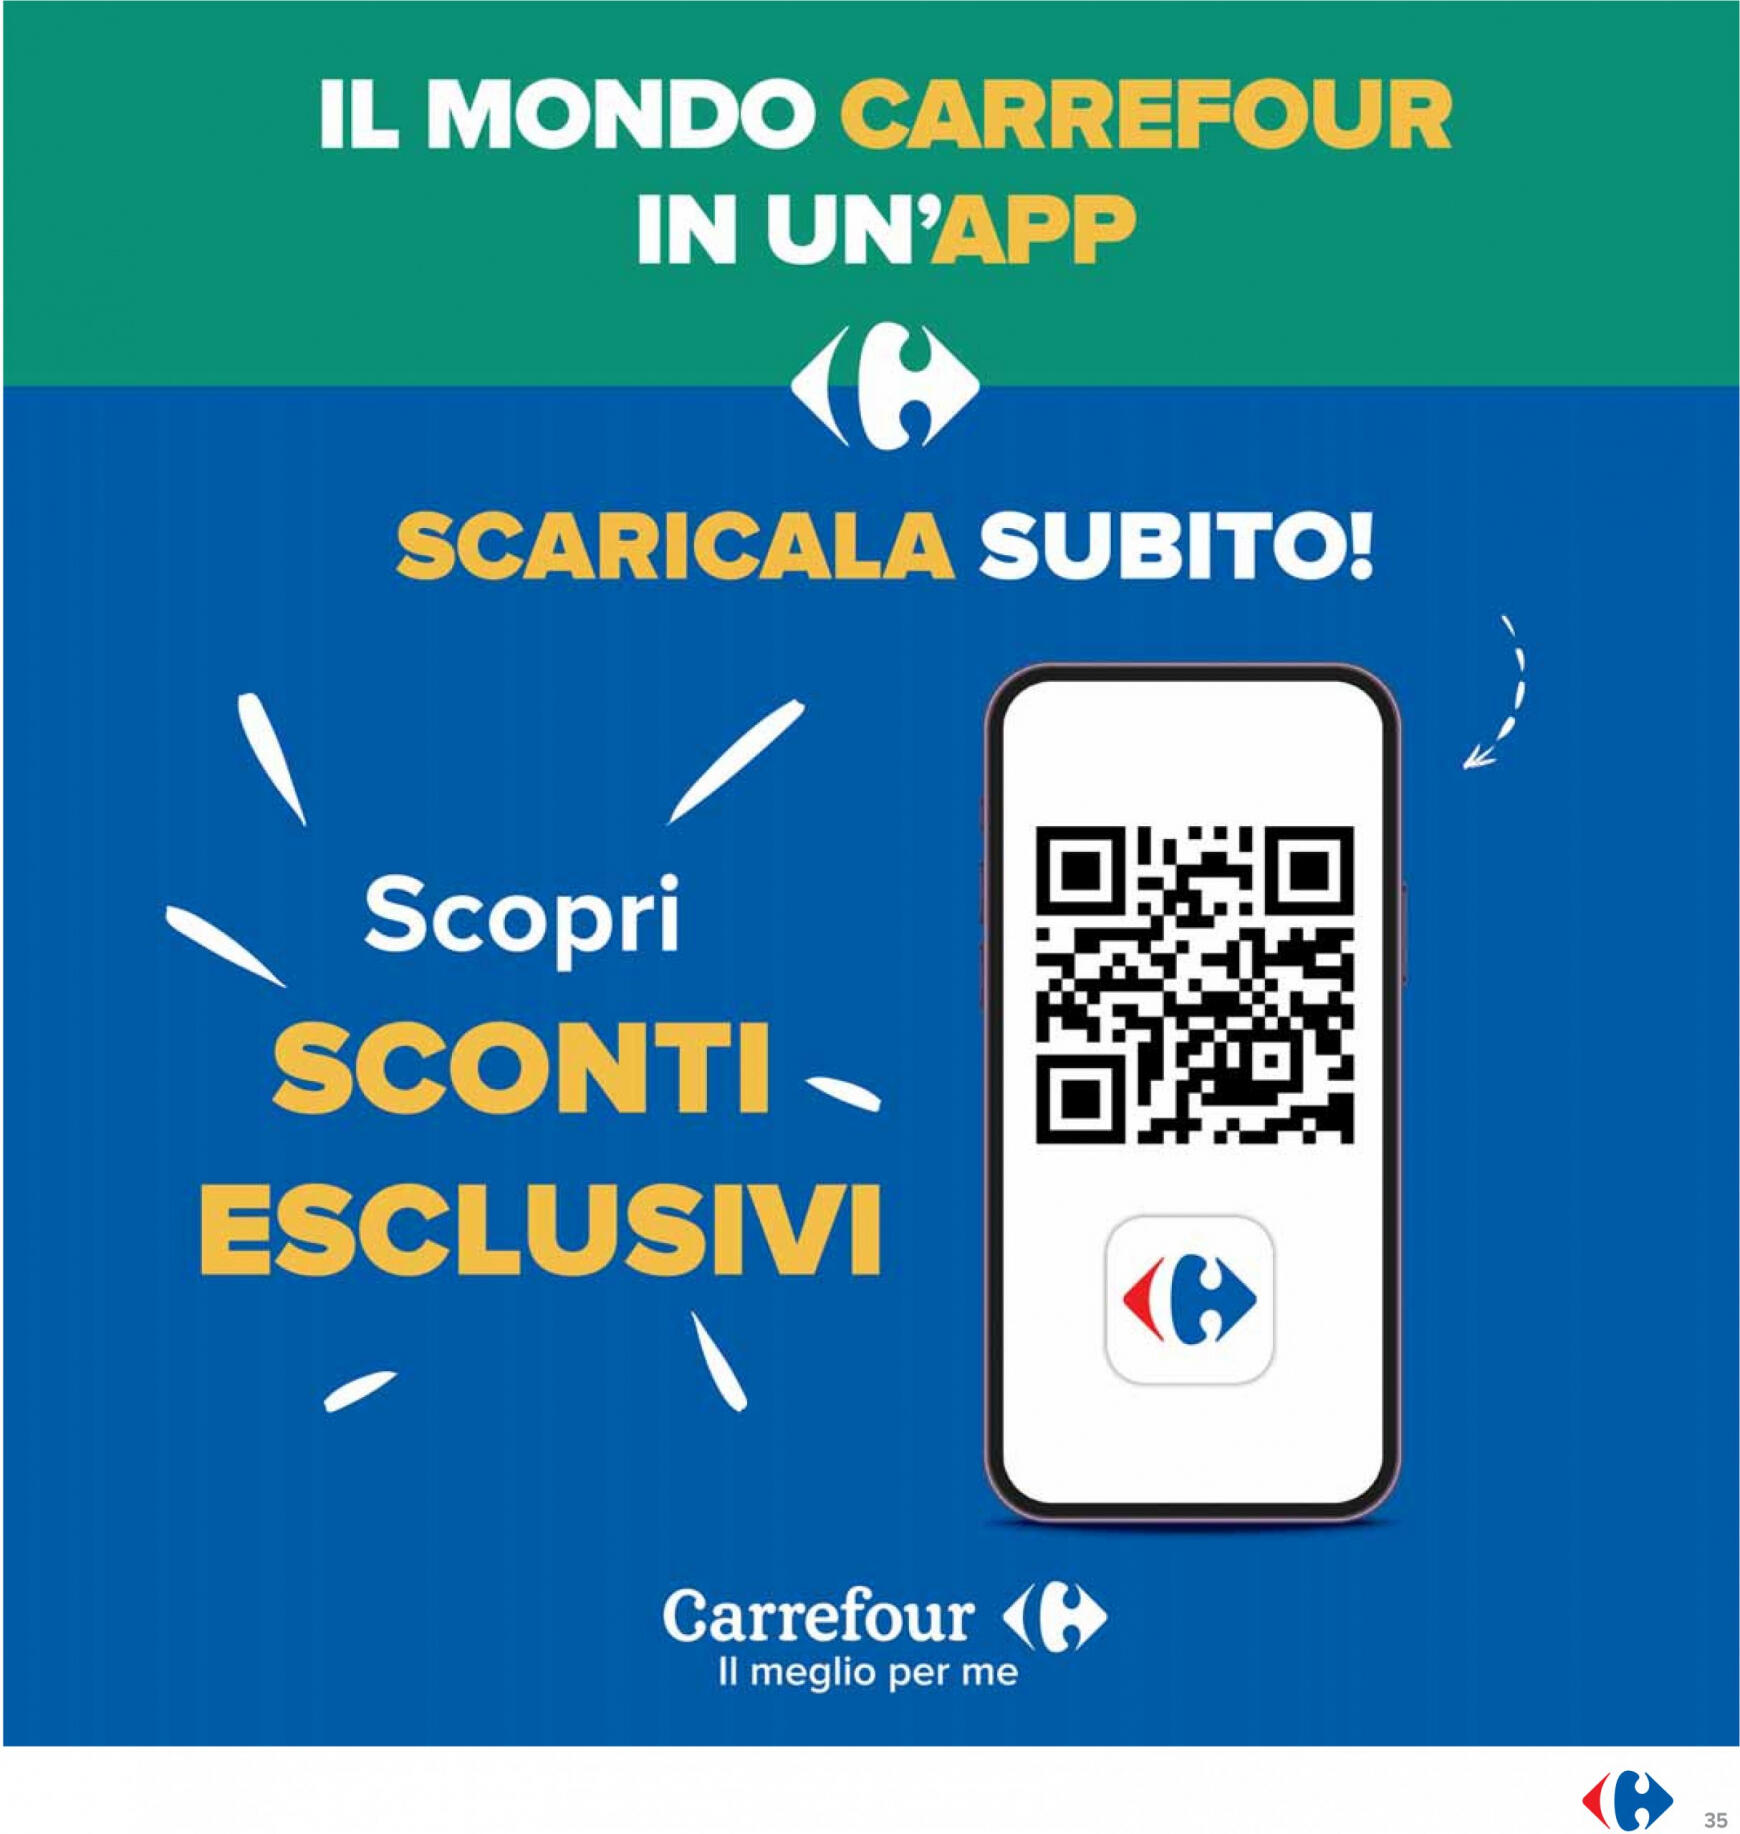 carrefour - Nuovo volantino Carrefour - Sconti europei 13.06. - 26.06. - page: 35